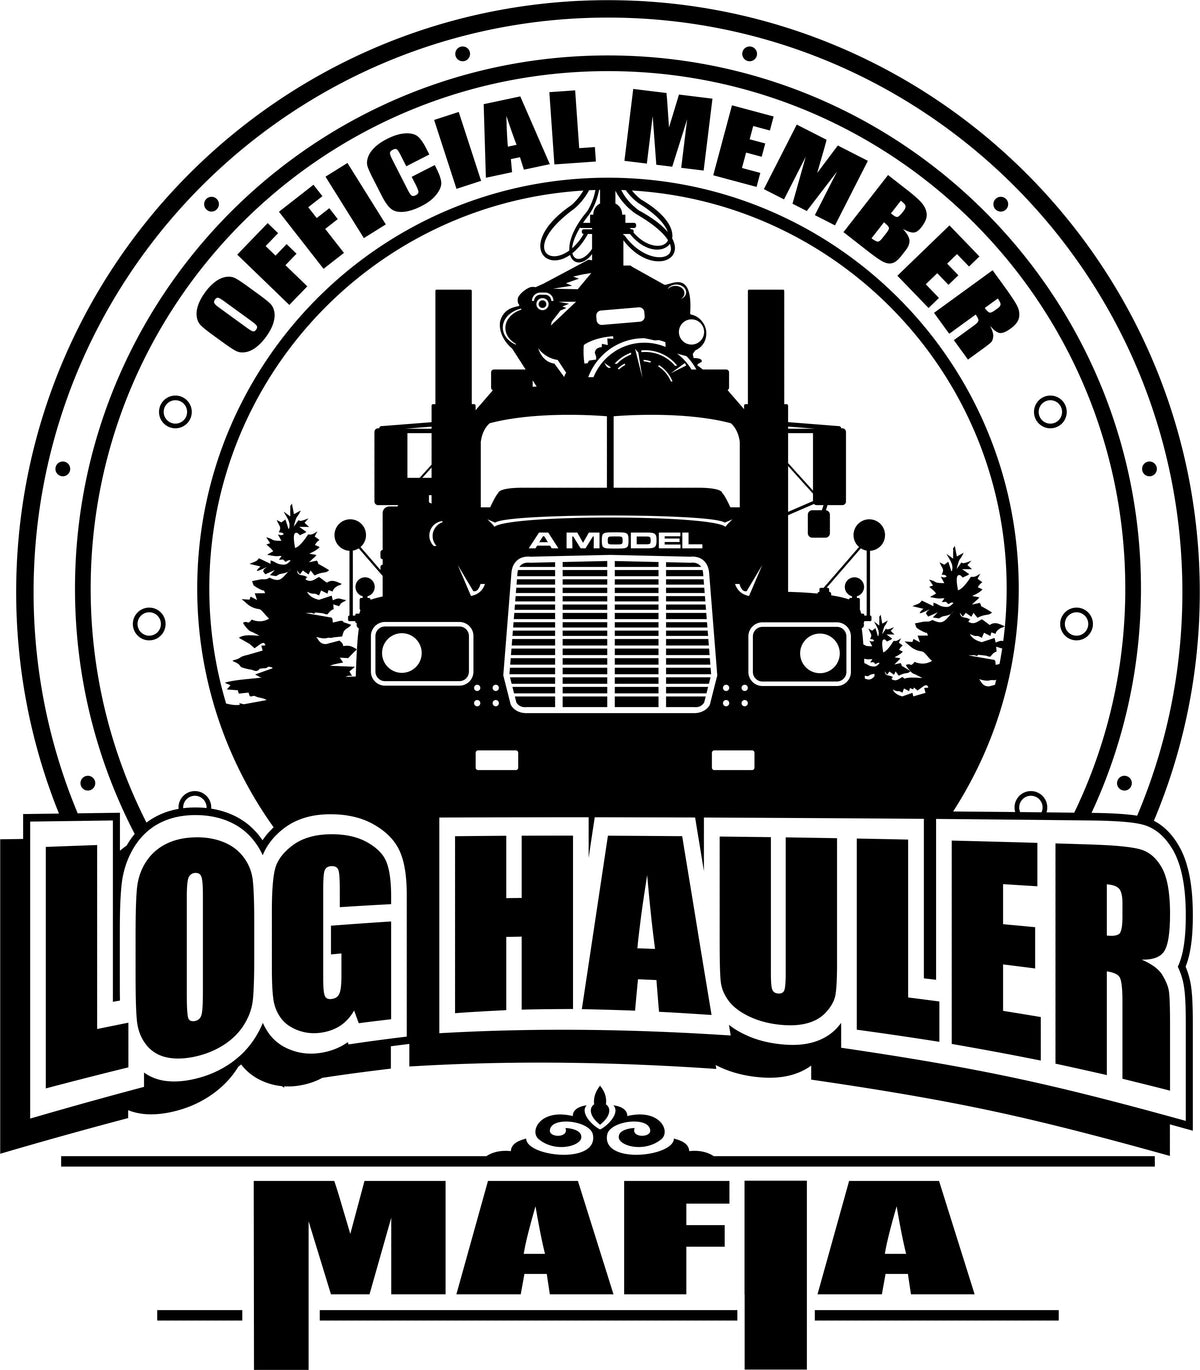 Log Hauler Mafia A Model Vinyl Decal Free Shipping